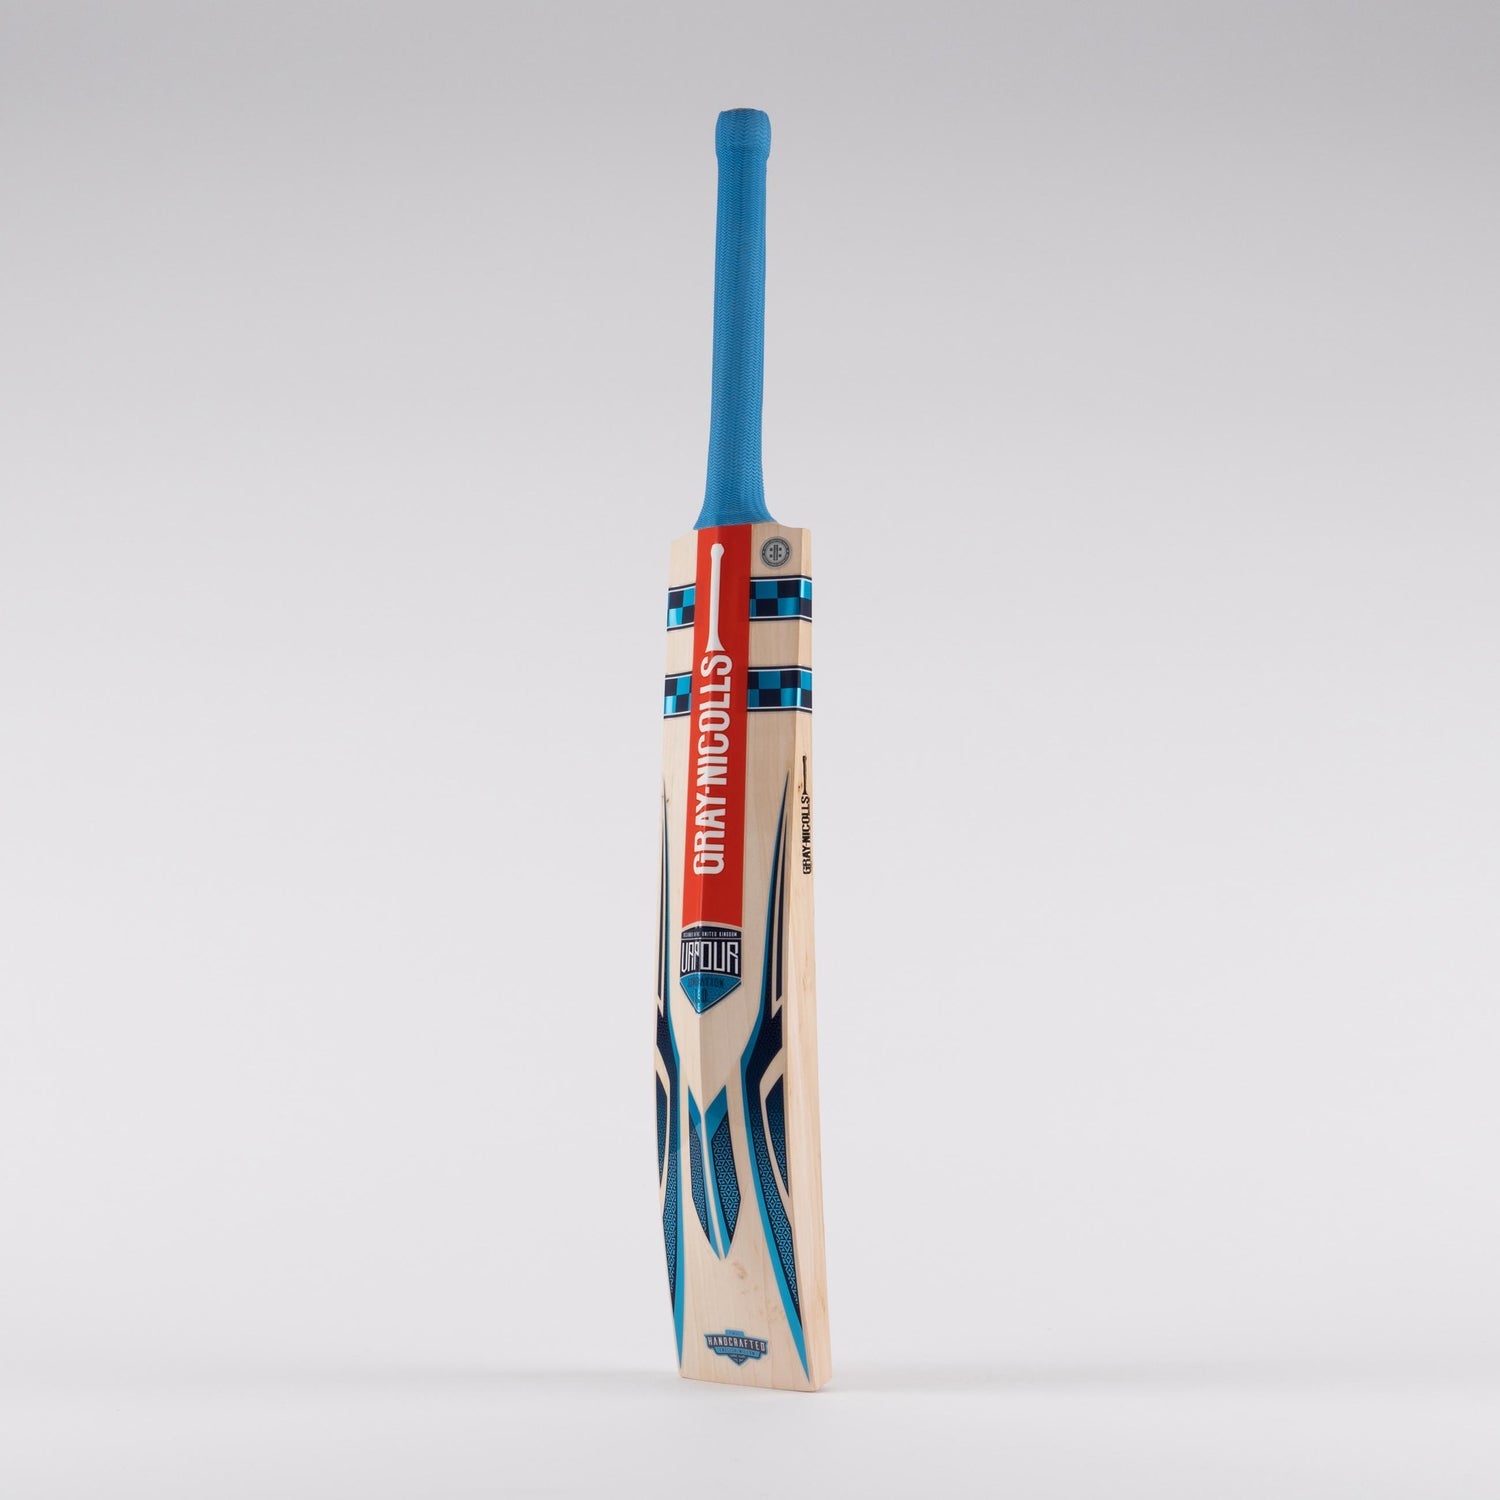 Gray Nicolls Cricket Bat, Model Vapour Gen 1.0 200, English Willow, PP